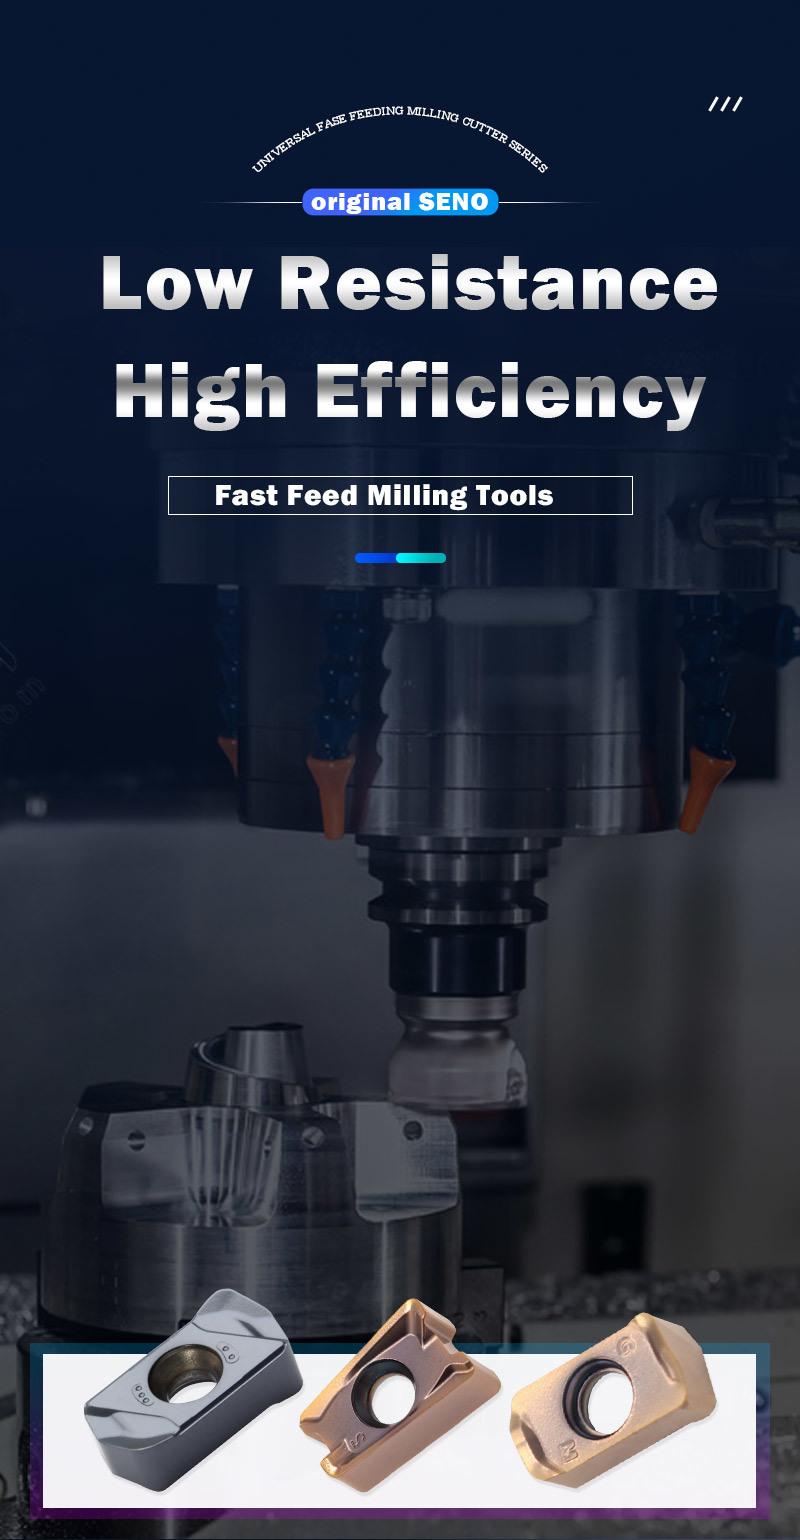 Seno Lathe Machine Milling Tools High Feeding Tungsten Carbide Insert Jdmt090308r